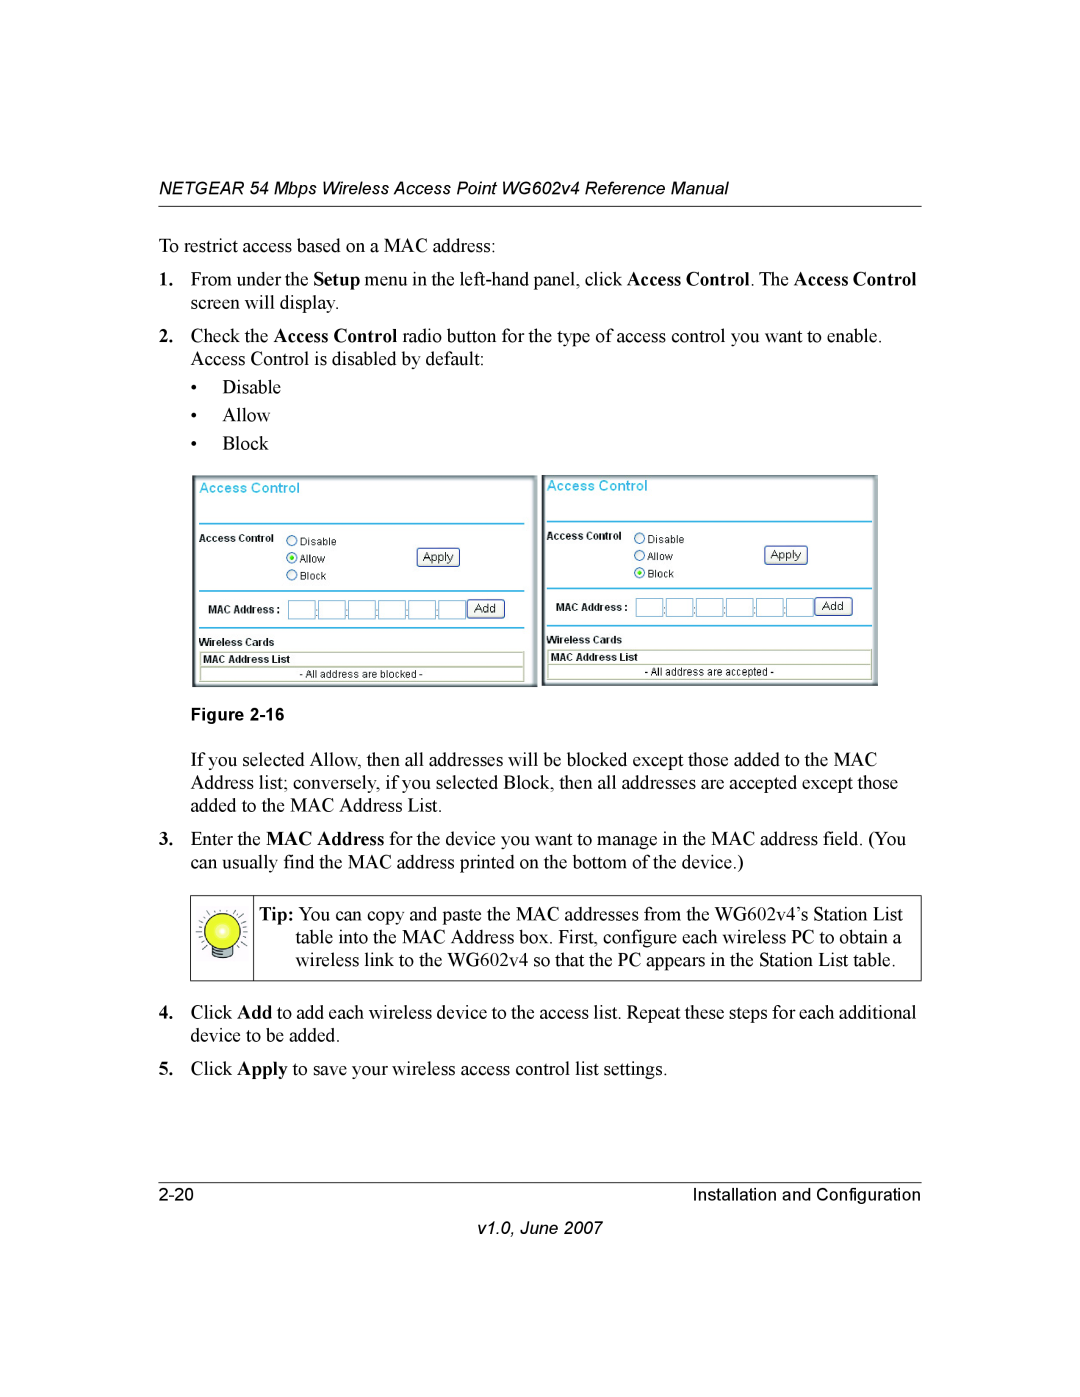 NETGEAR WG602V4 manual To restrict access based on a MAC address 